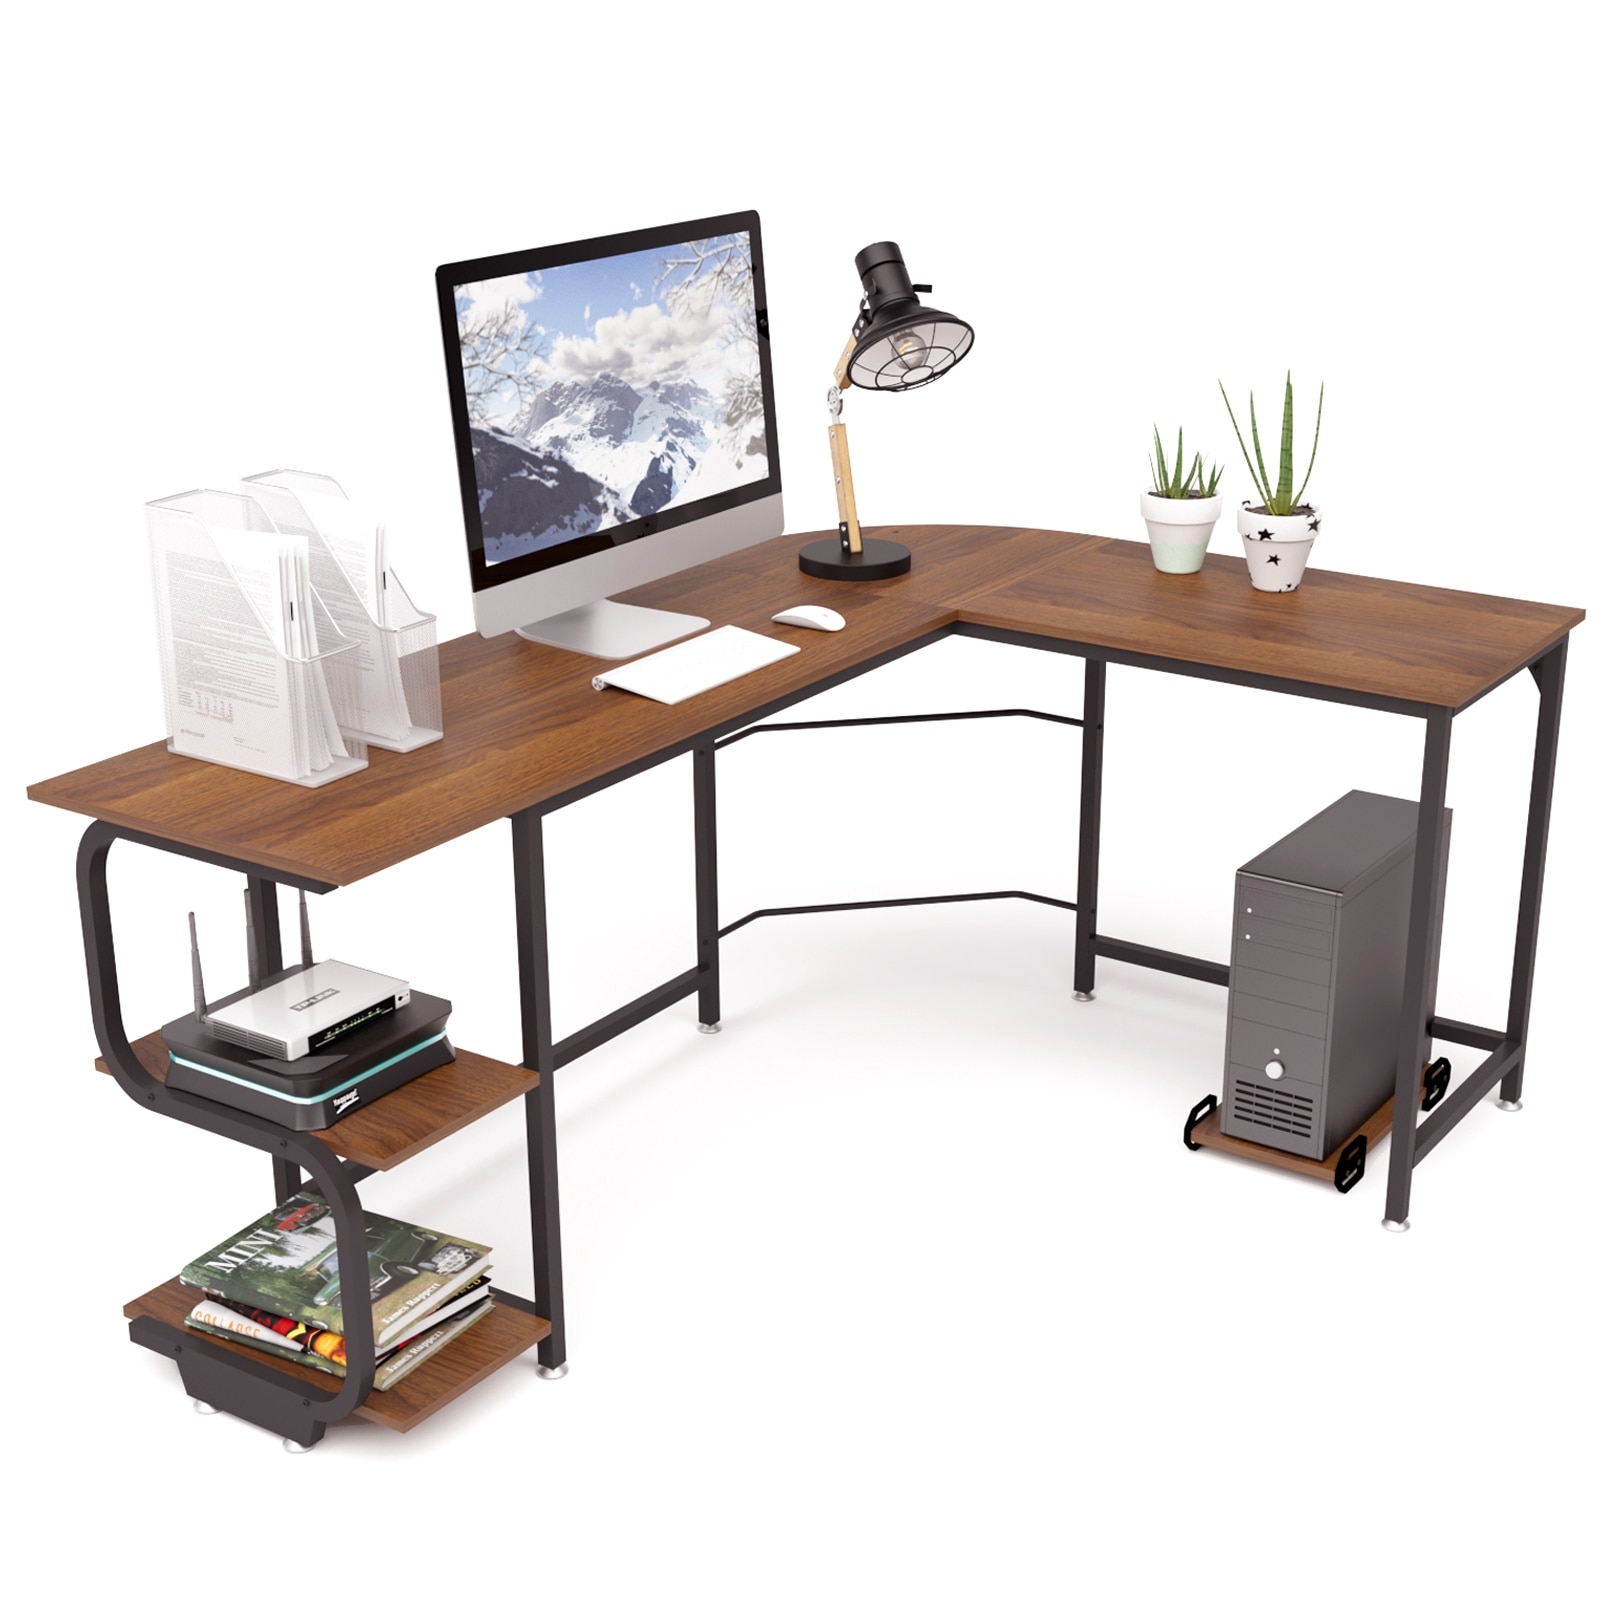 Computer Desk W/Bookshelf PC Workstation Home Office Desk With Storage Bookcase 